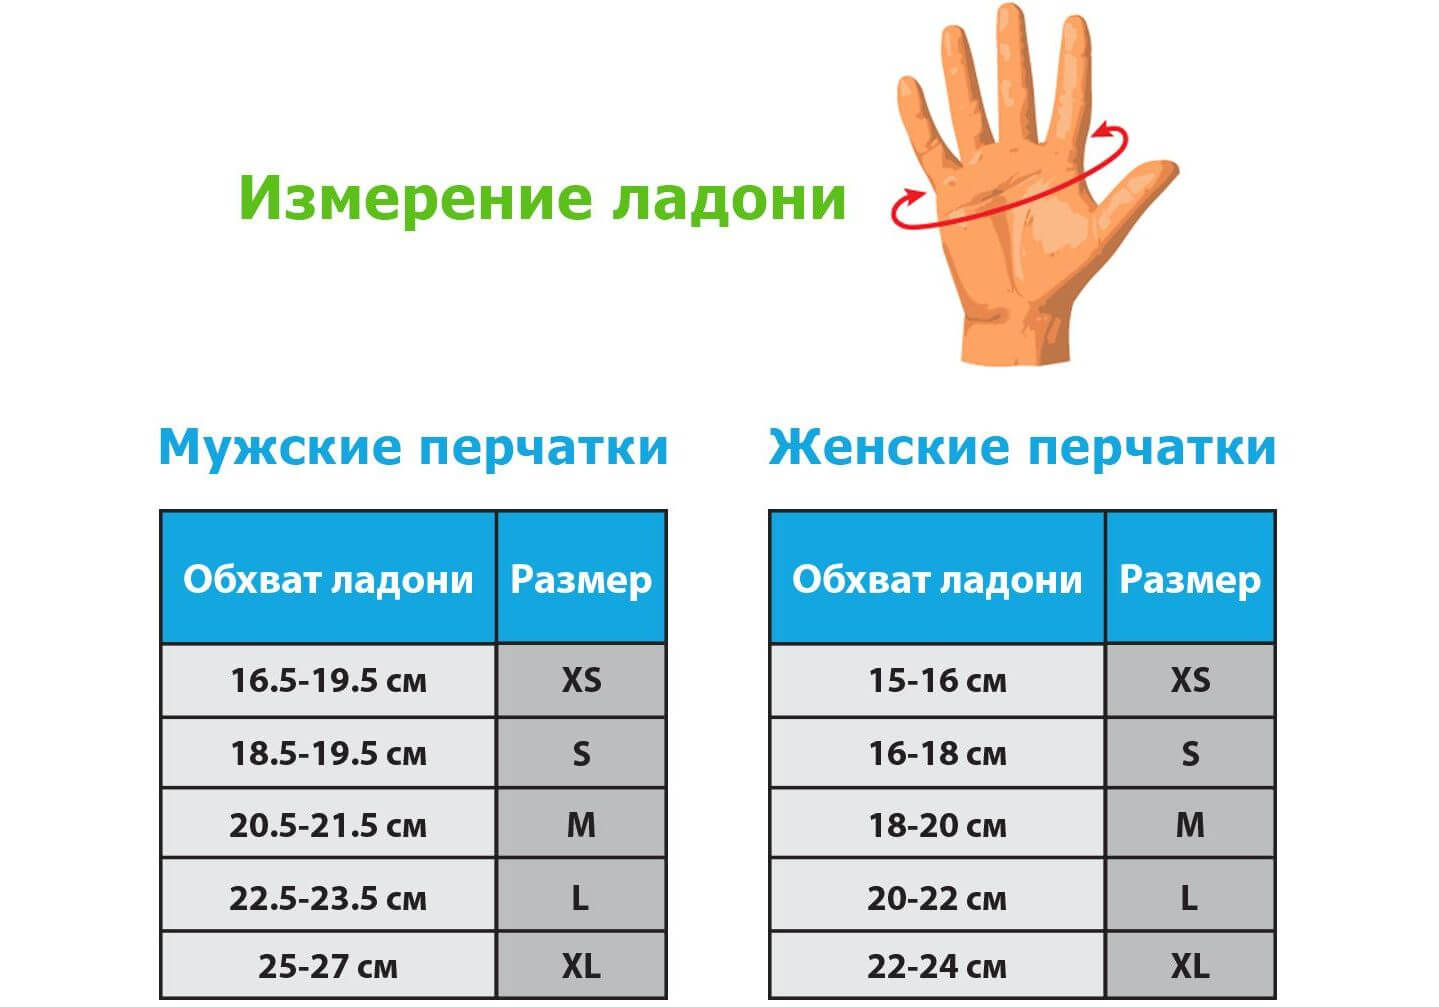 Перчатки какой руки. Размер перчаток мужских s m l XL. Перчатки для фитнеса Размерная сетка. Размен персаток. Размер перчаток женскии.